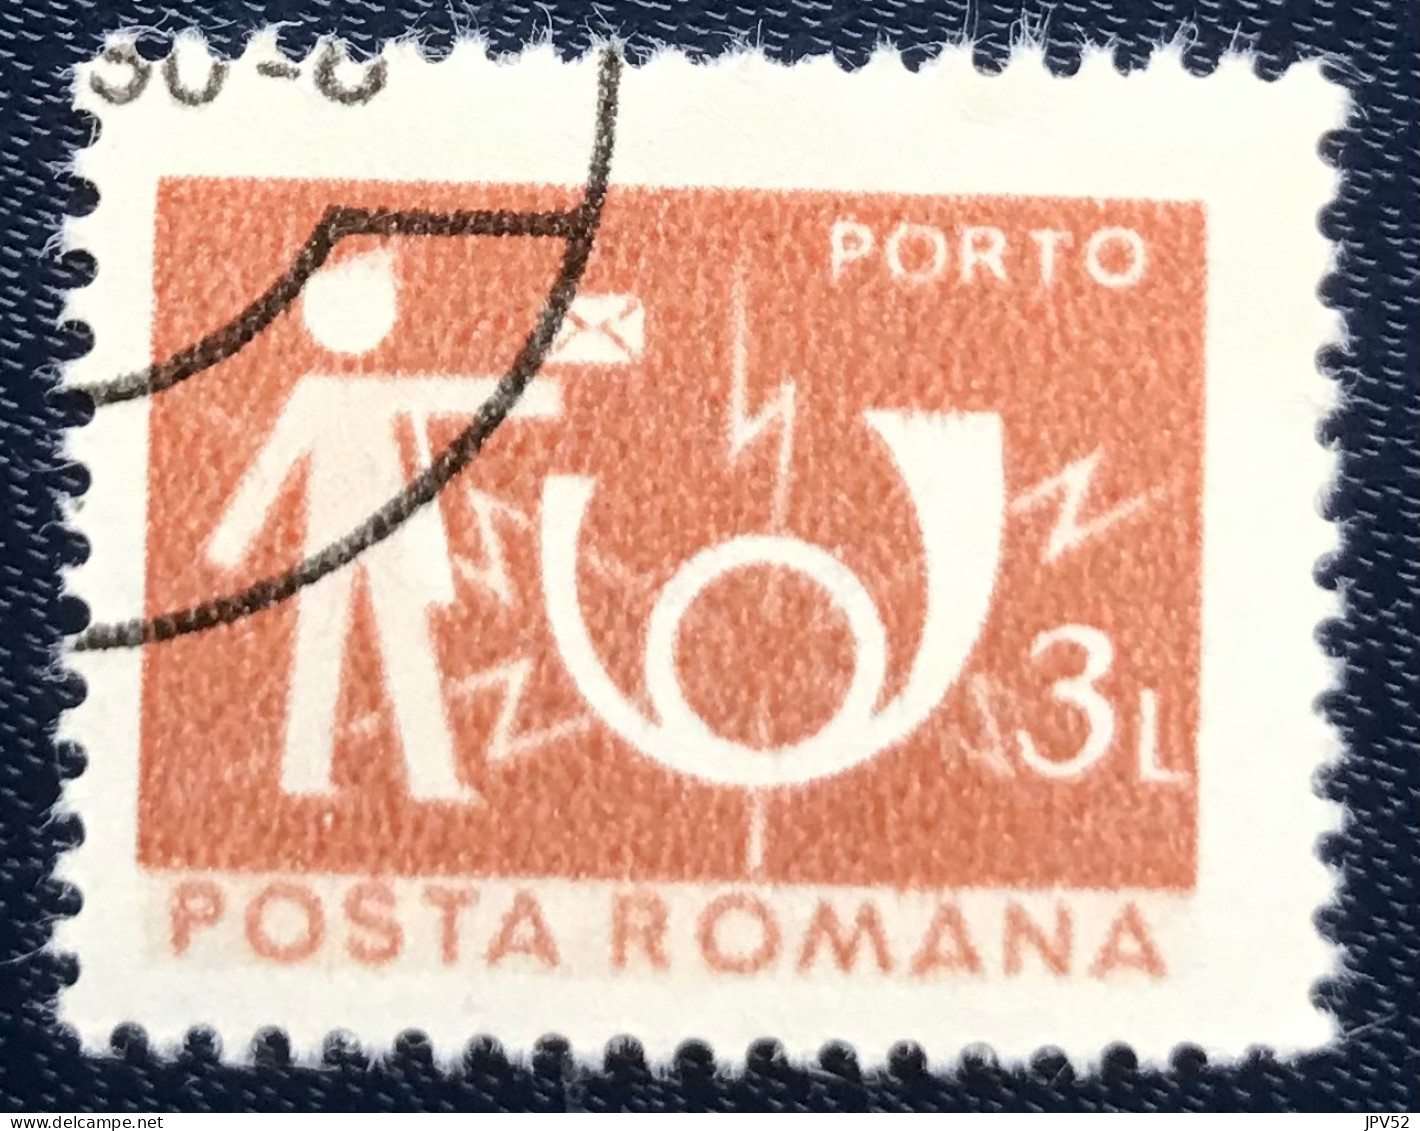 Romana - Roemenië - C14/53 - 1982 - (°)used - Michel 129 - Postbode & Posthoorn - Postage Due